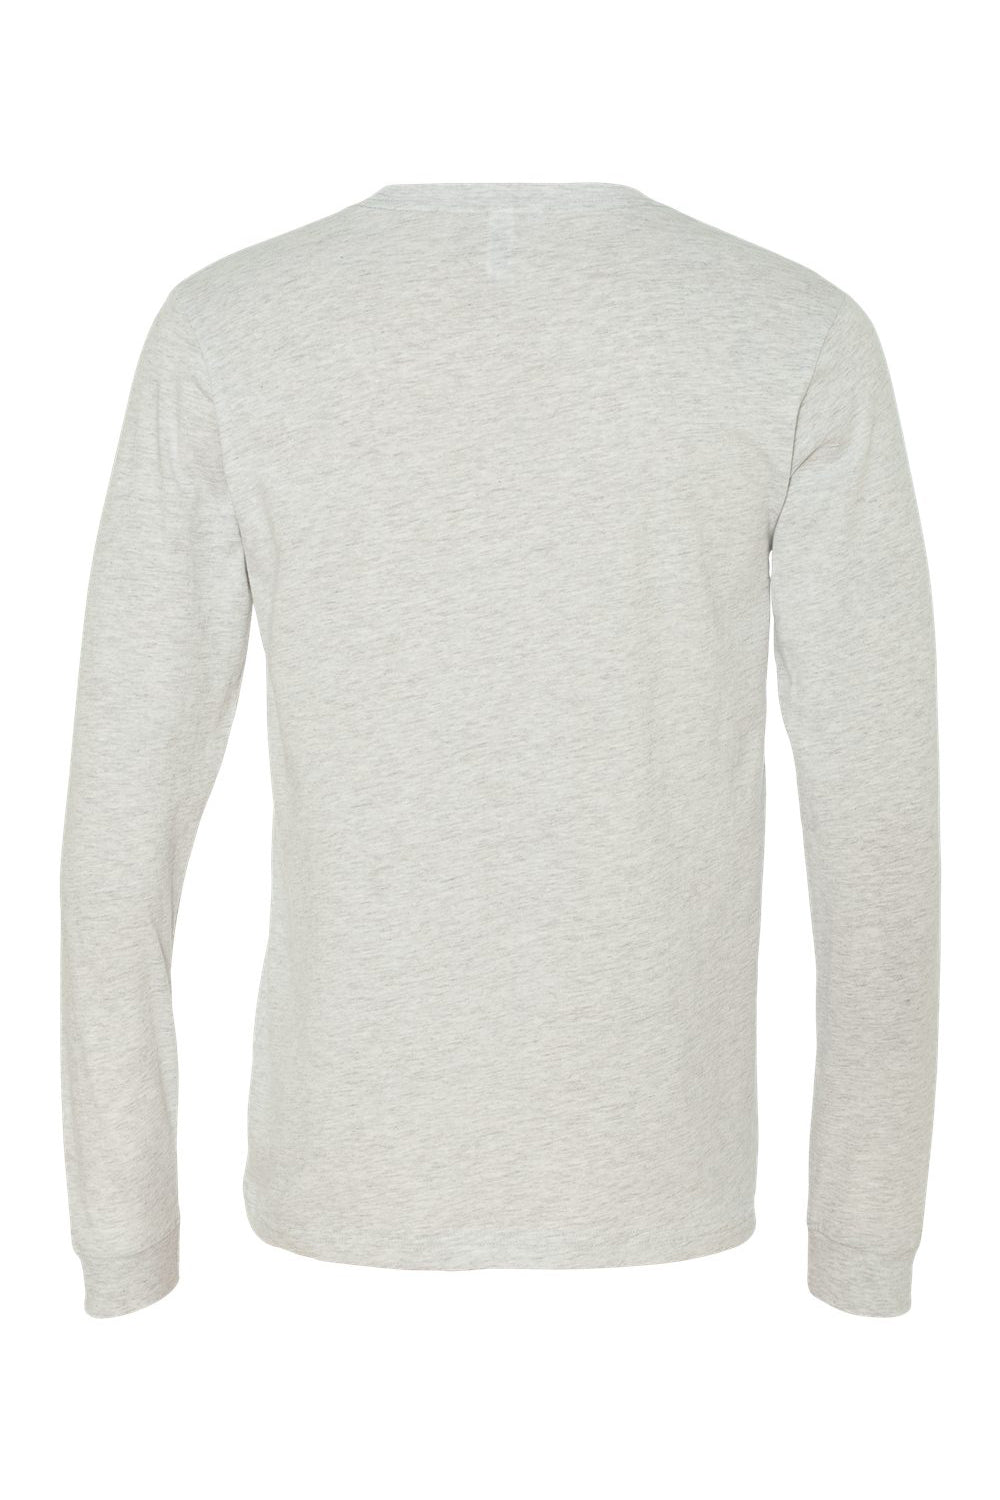 Bella + Canvas BC3501/3501 Mens Jersey Long Sleeve Crewneck T-Shirt Ash Grey Flat Back